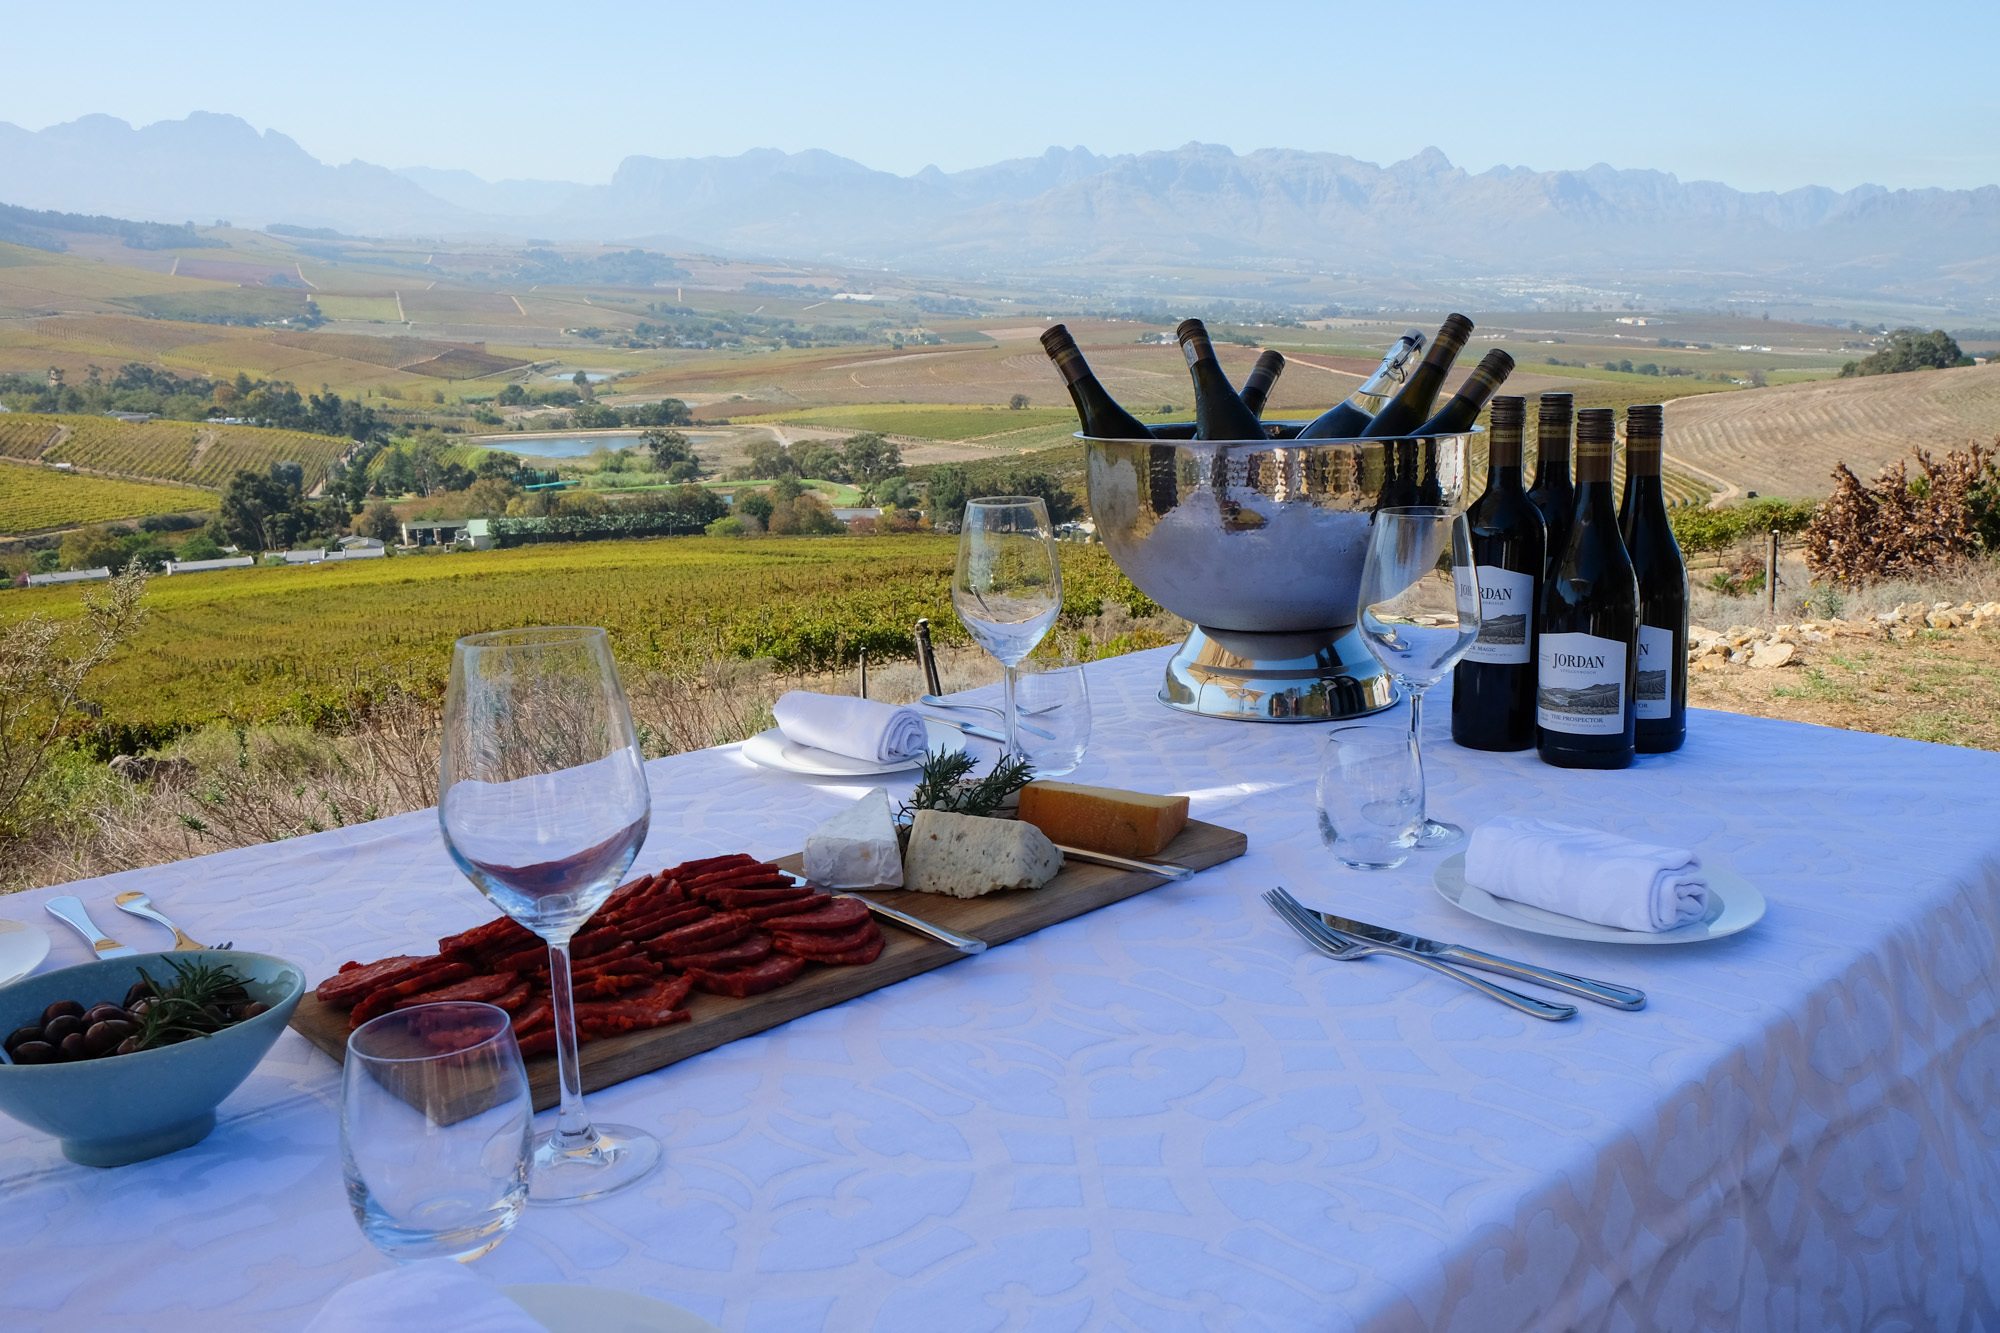 Jordan Wine Estate in South Africa